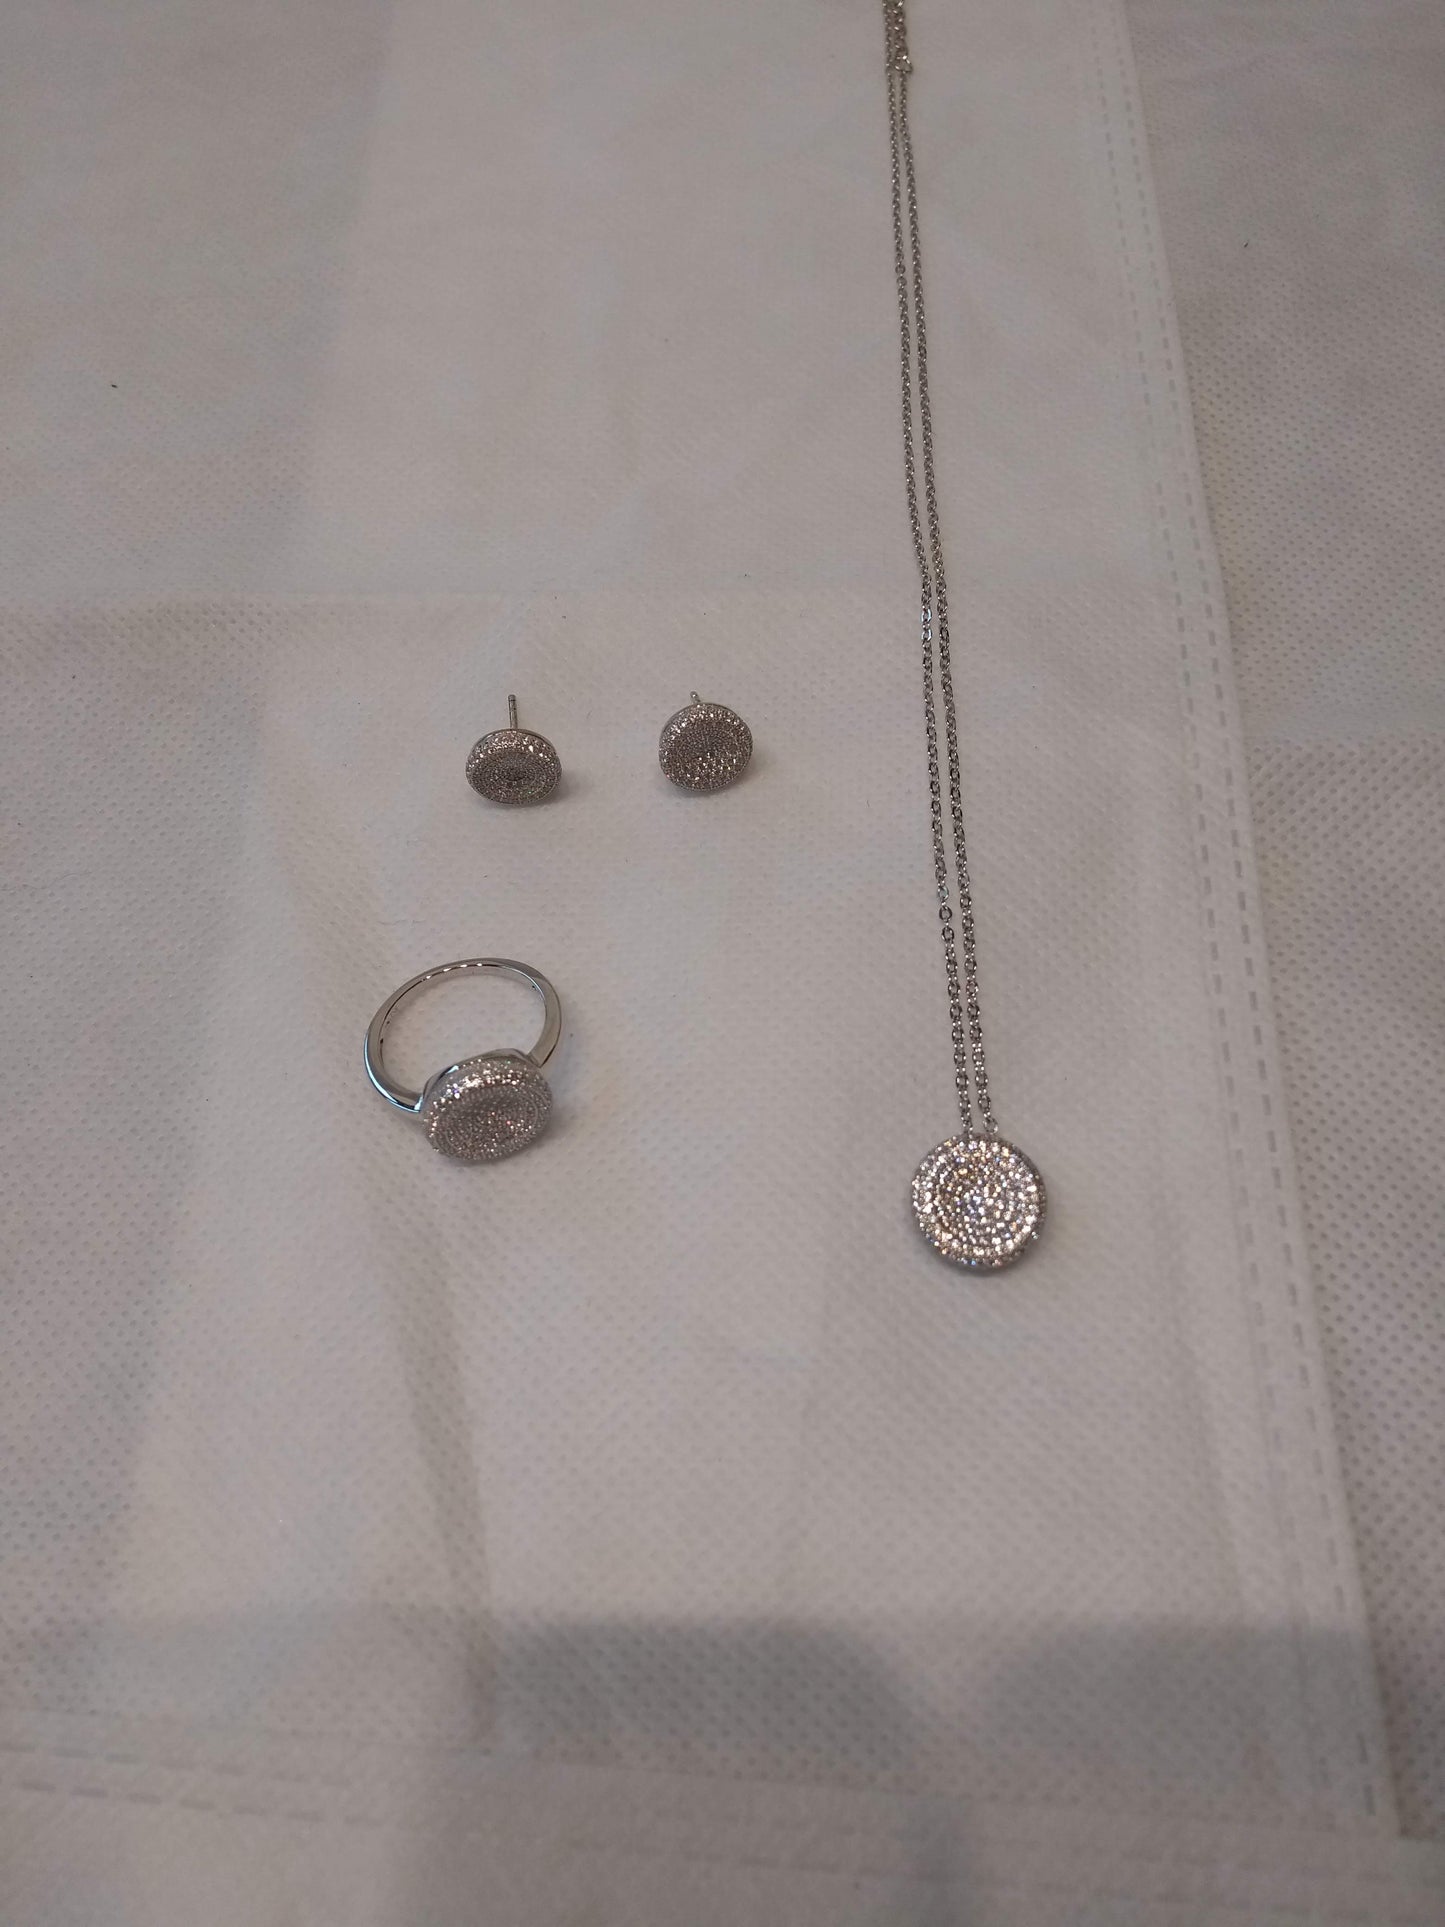 Mylene Allure collectie sieraden 925 zilver